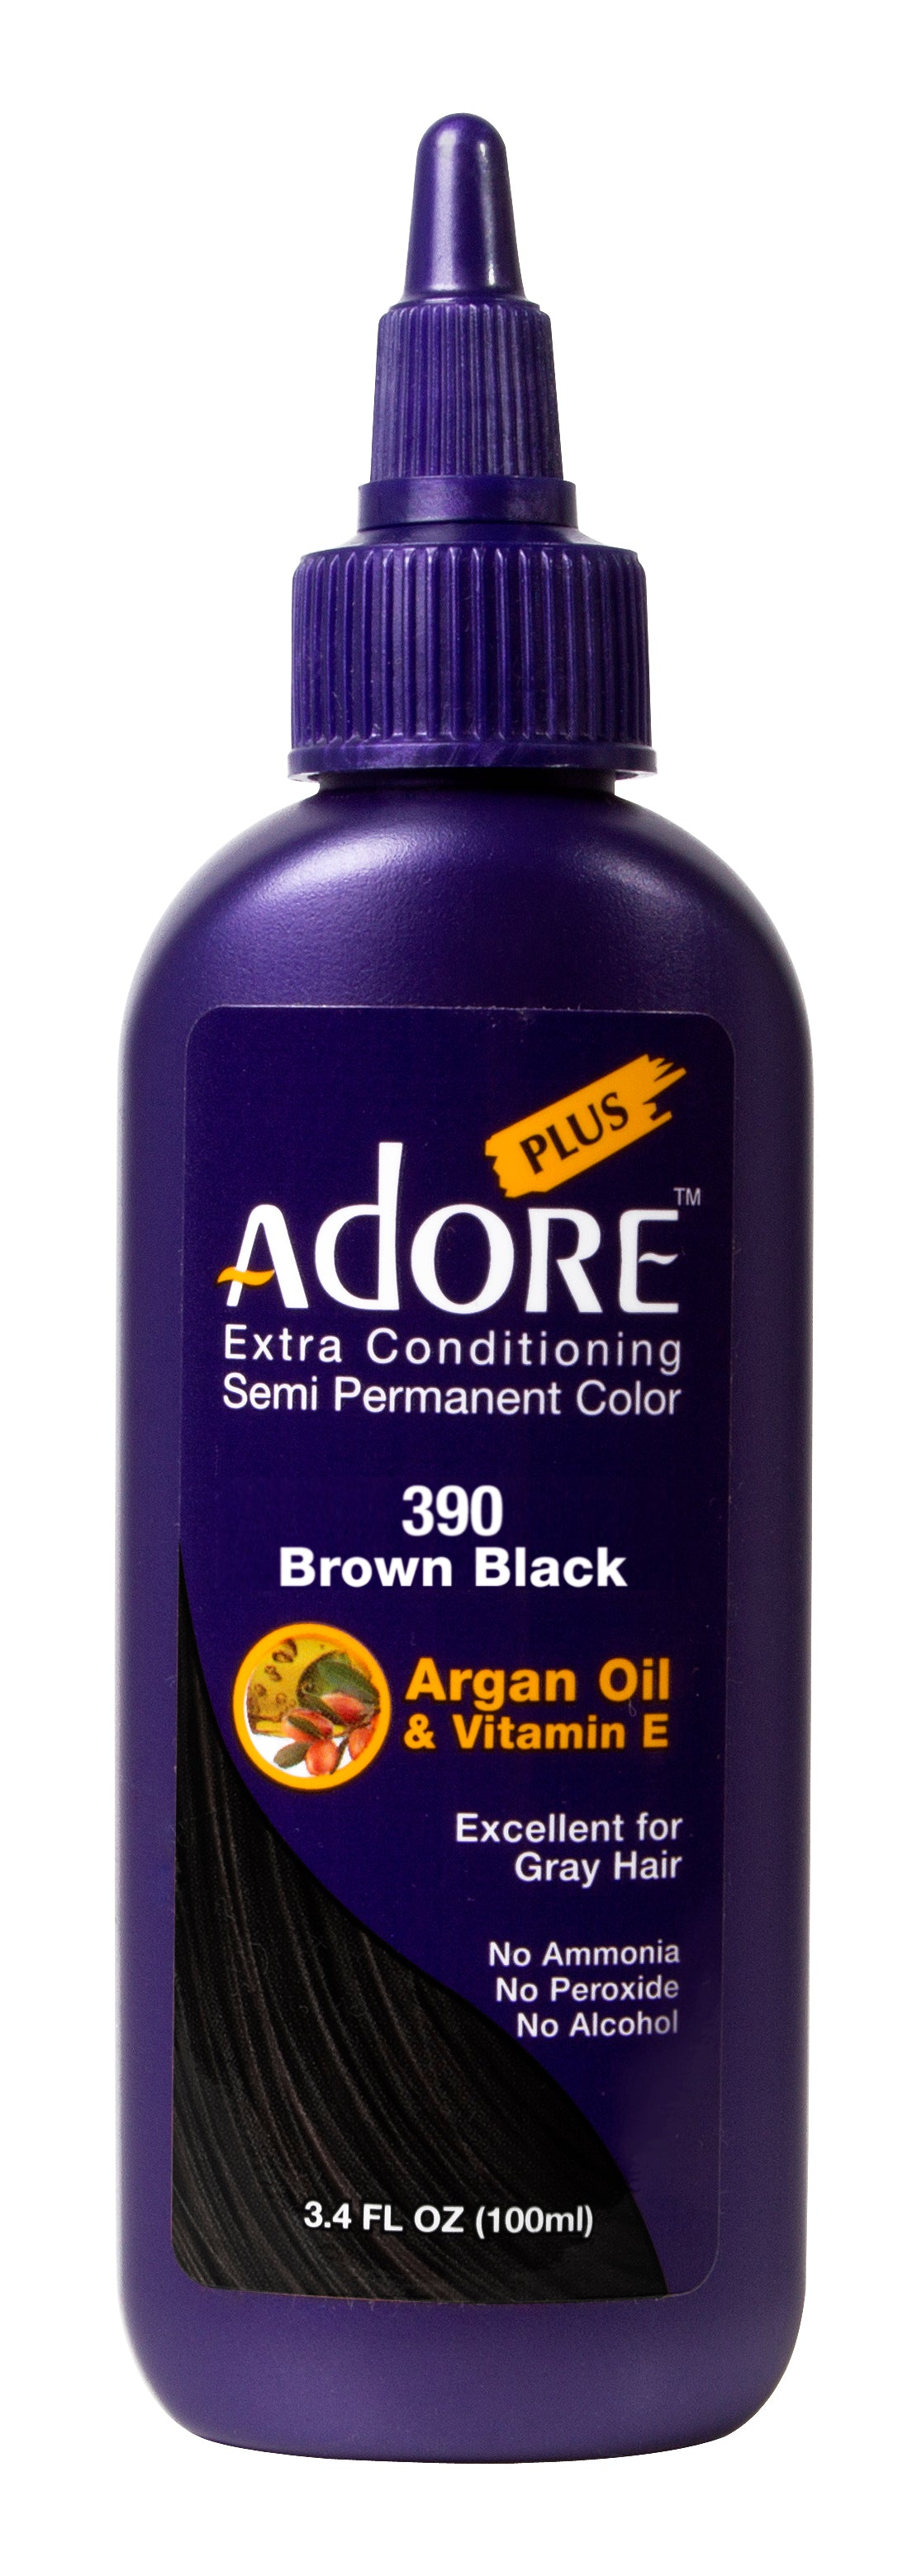 Adore Brown Black #390